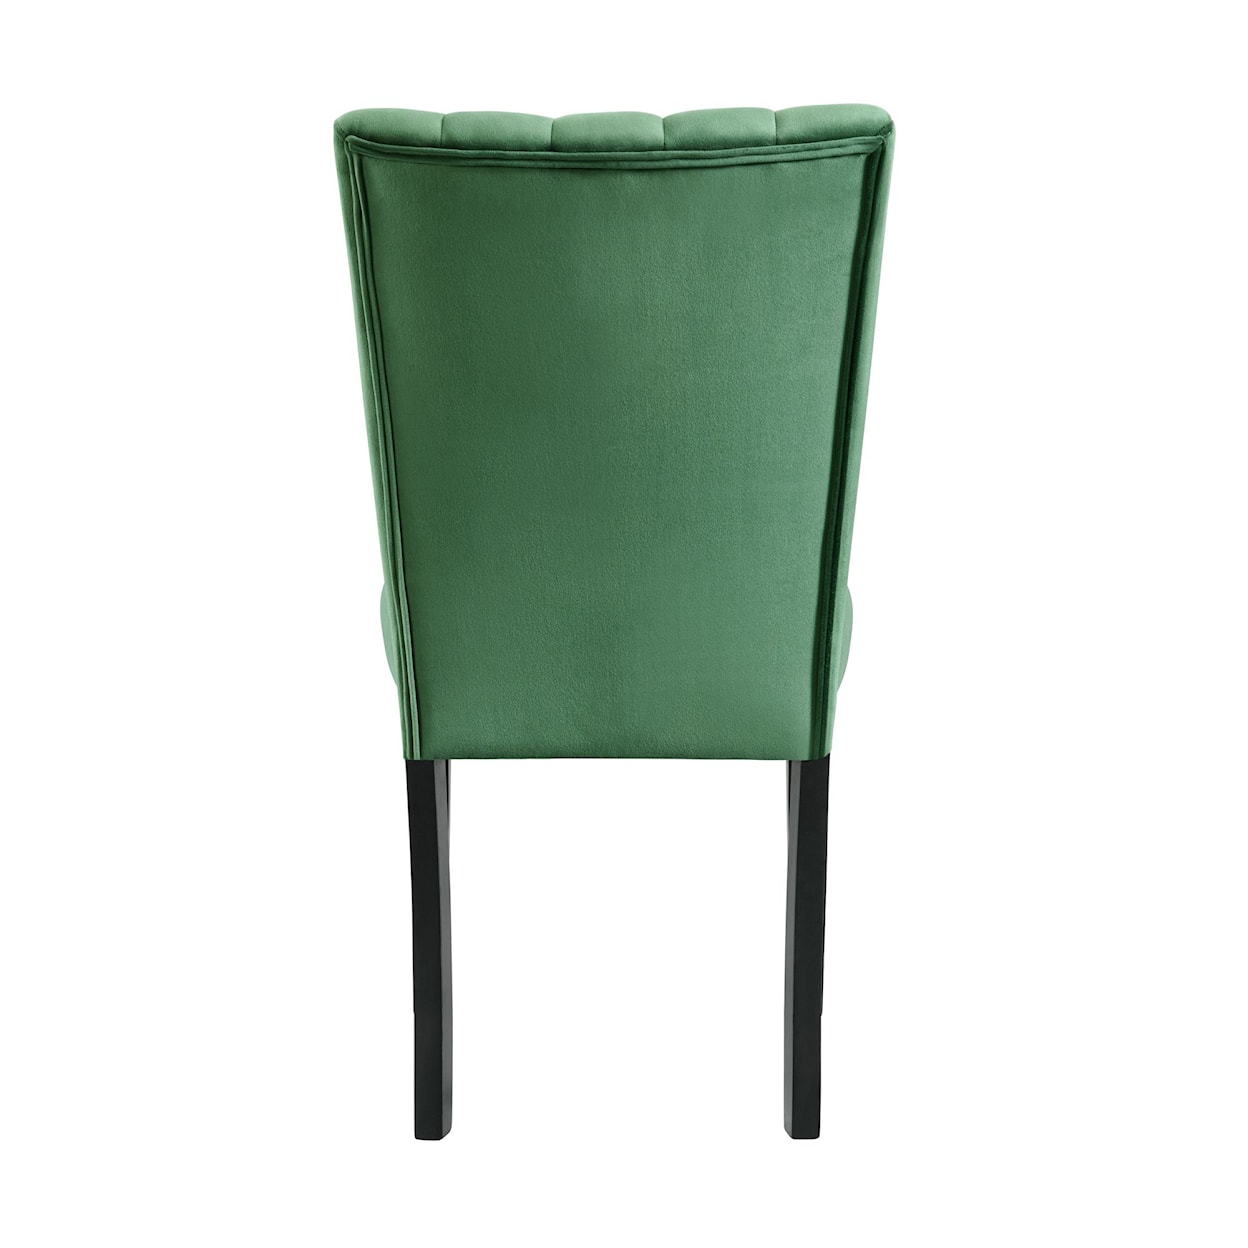 Elements International Bellini Side Chair